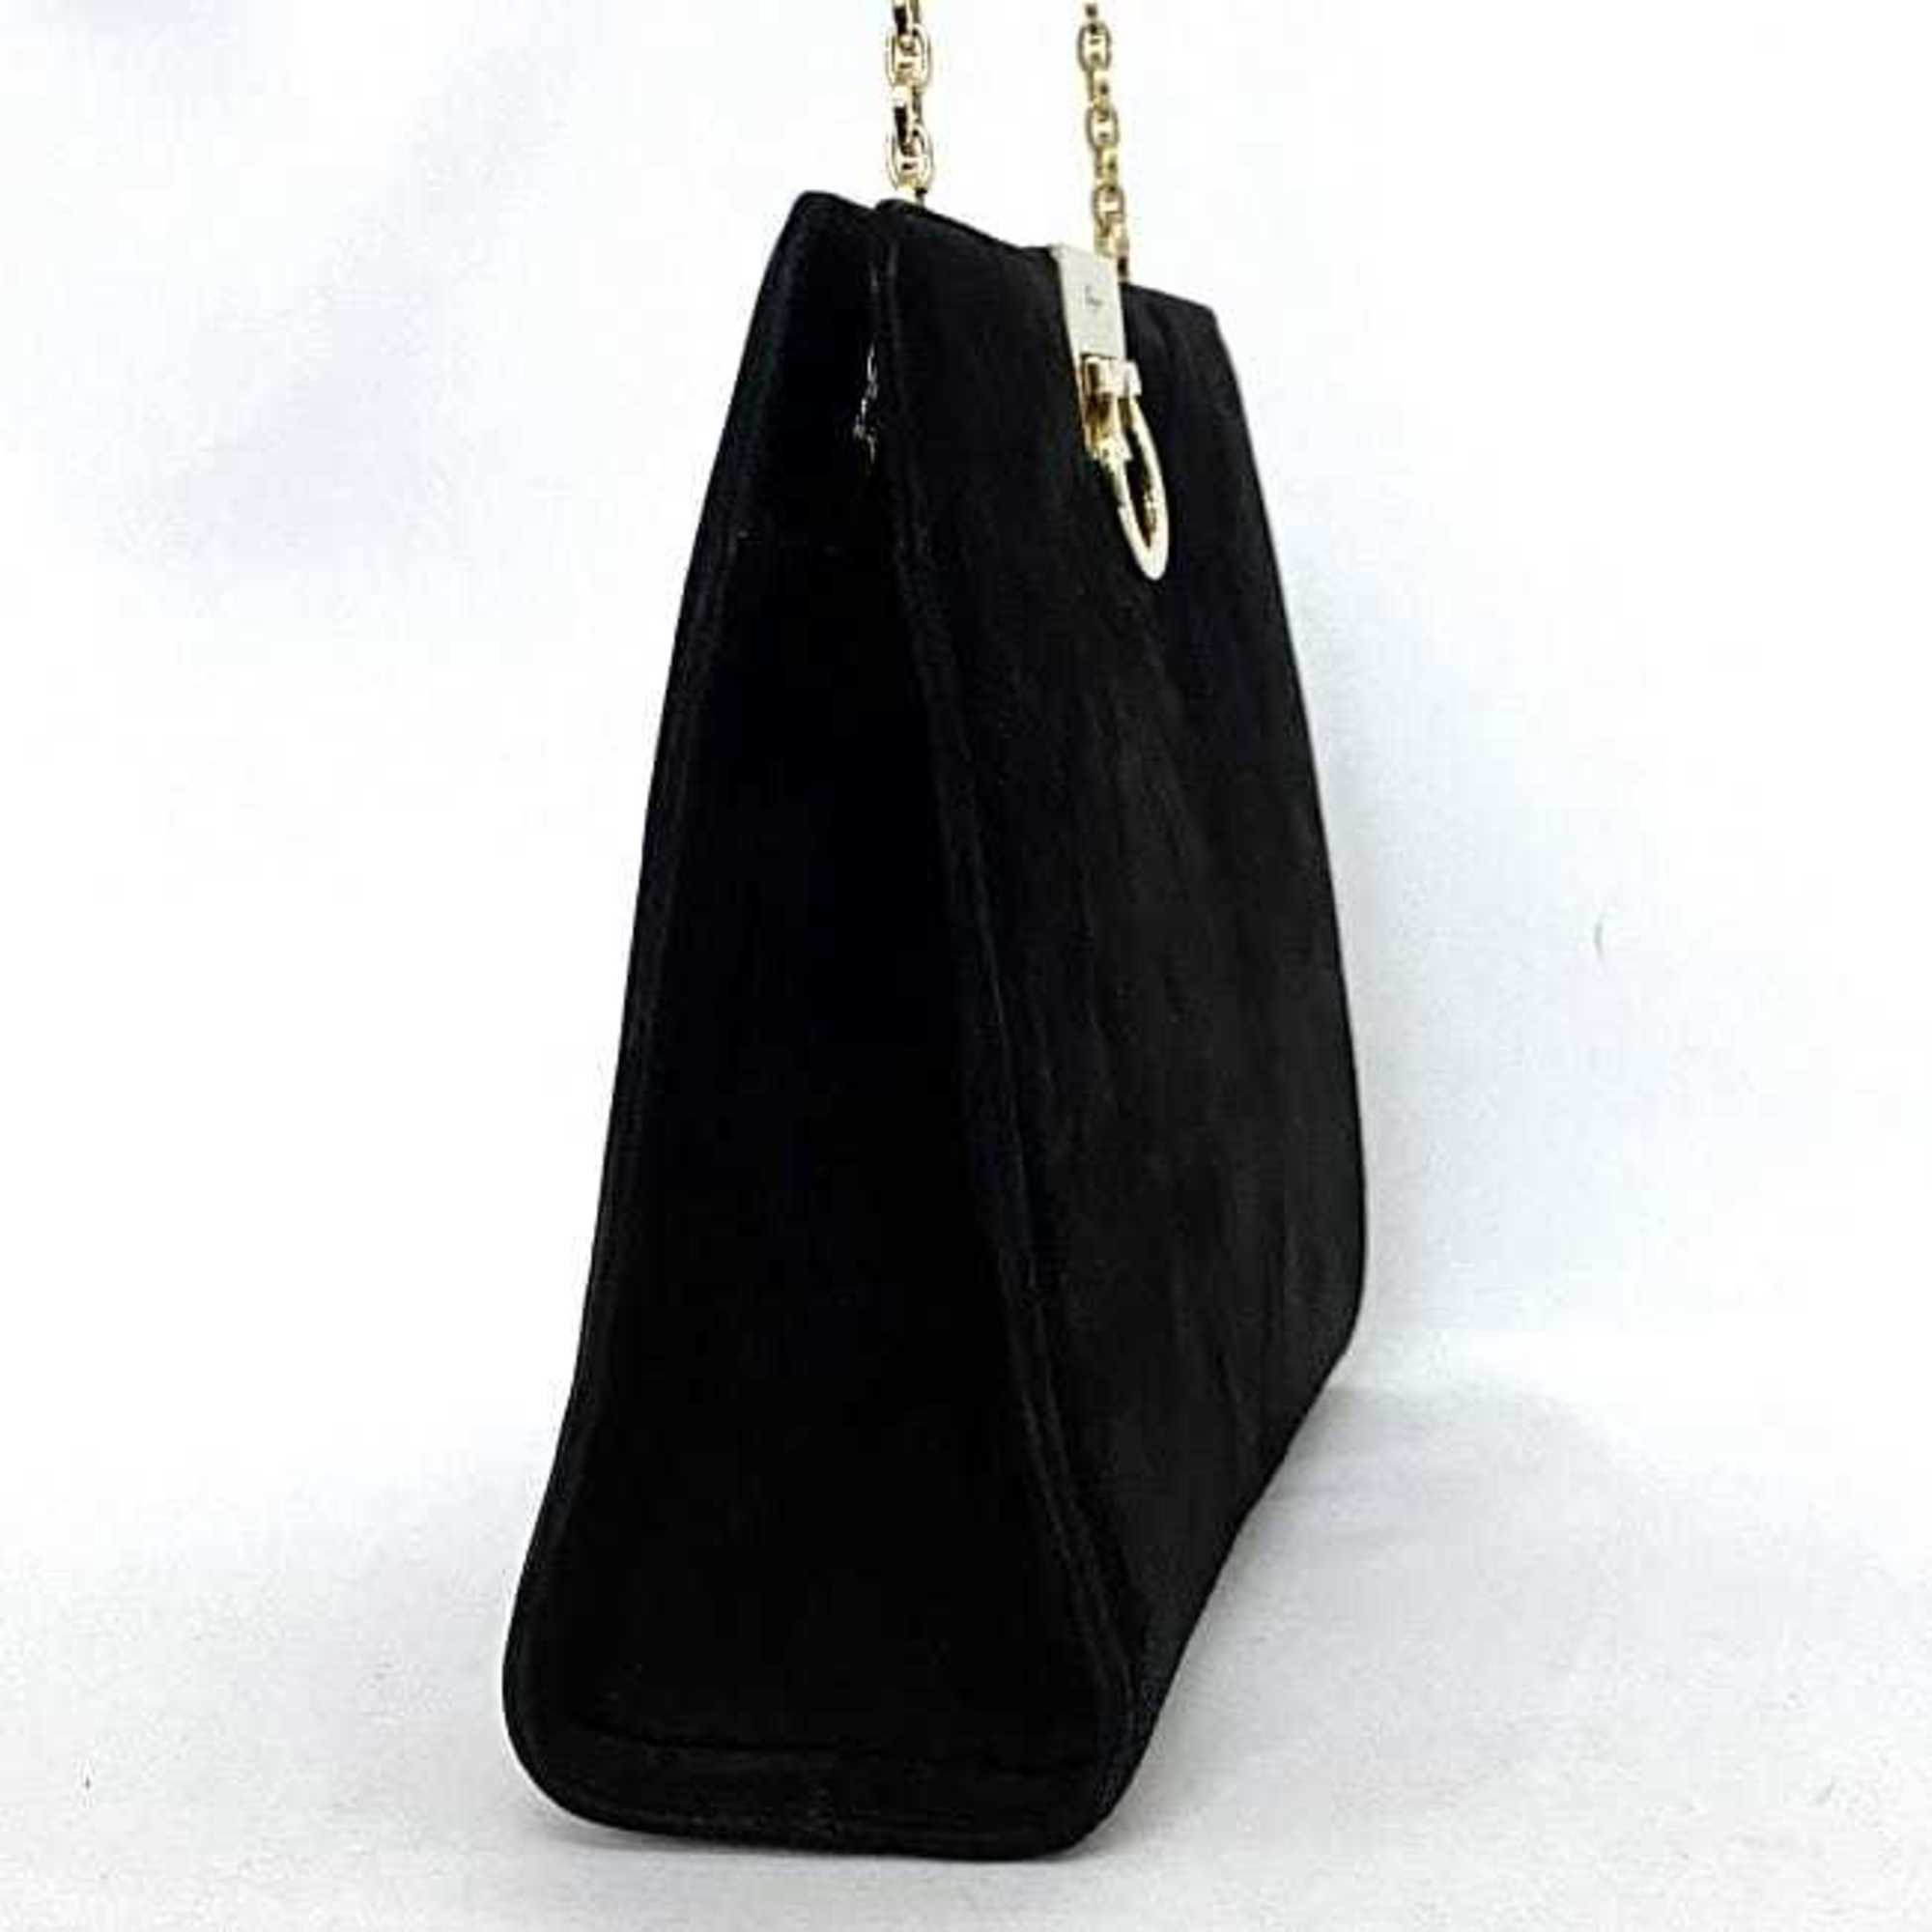 Salvatore Ferragamo Ferragamo Chain Shoulder Bag Black Gold Gancini BP-21 8753 Suede GP Salvatore Velvet Ladies Compact